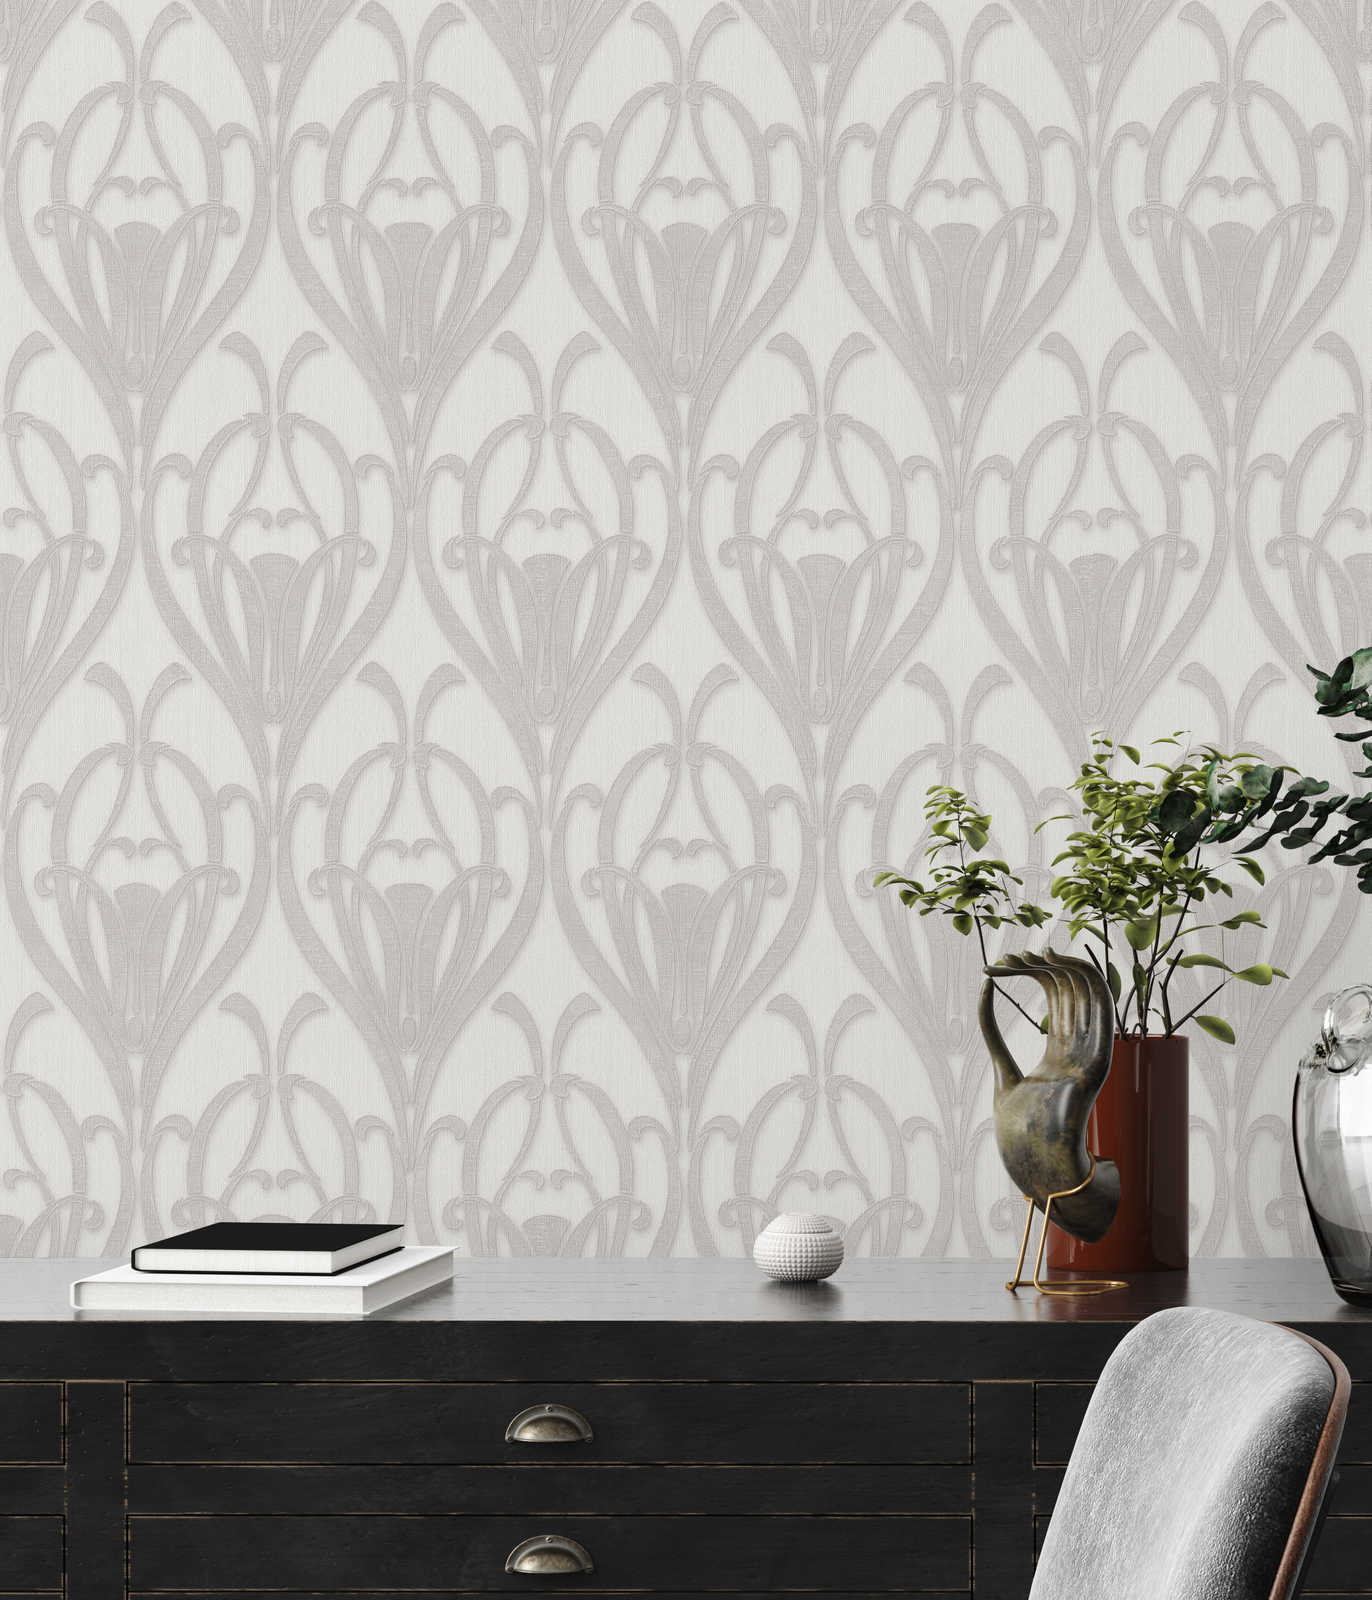             Ornament wallpaper with art deco pattern & textile texture
        